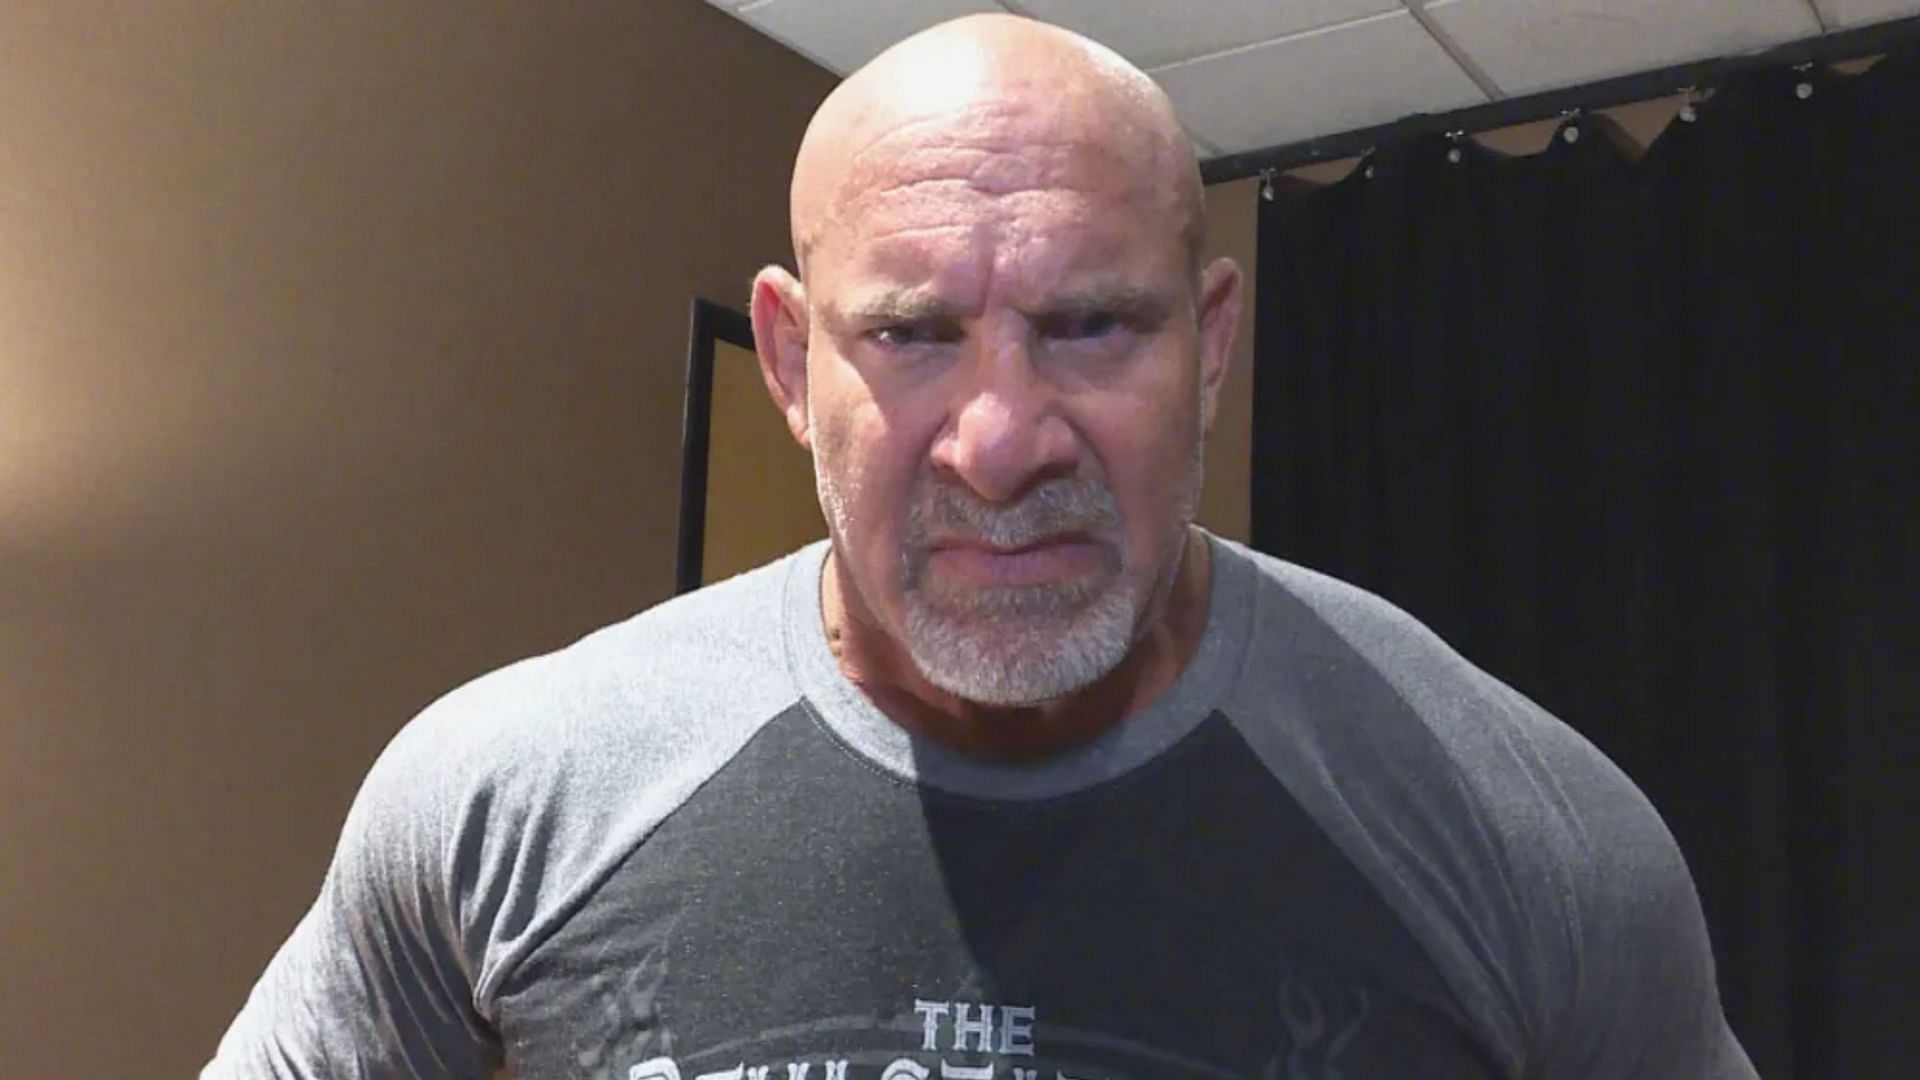 WWE Hall of Famer Goldberg didn